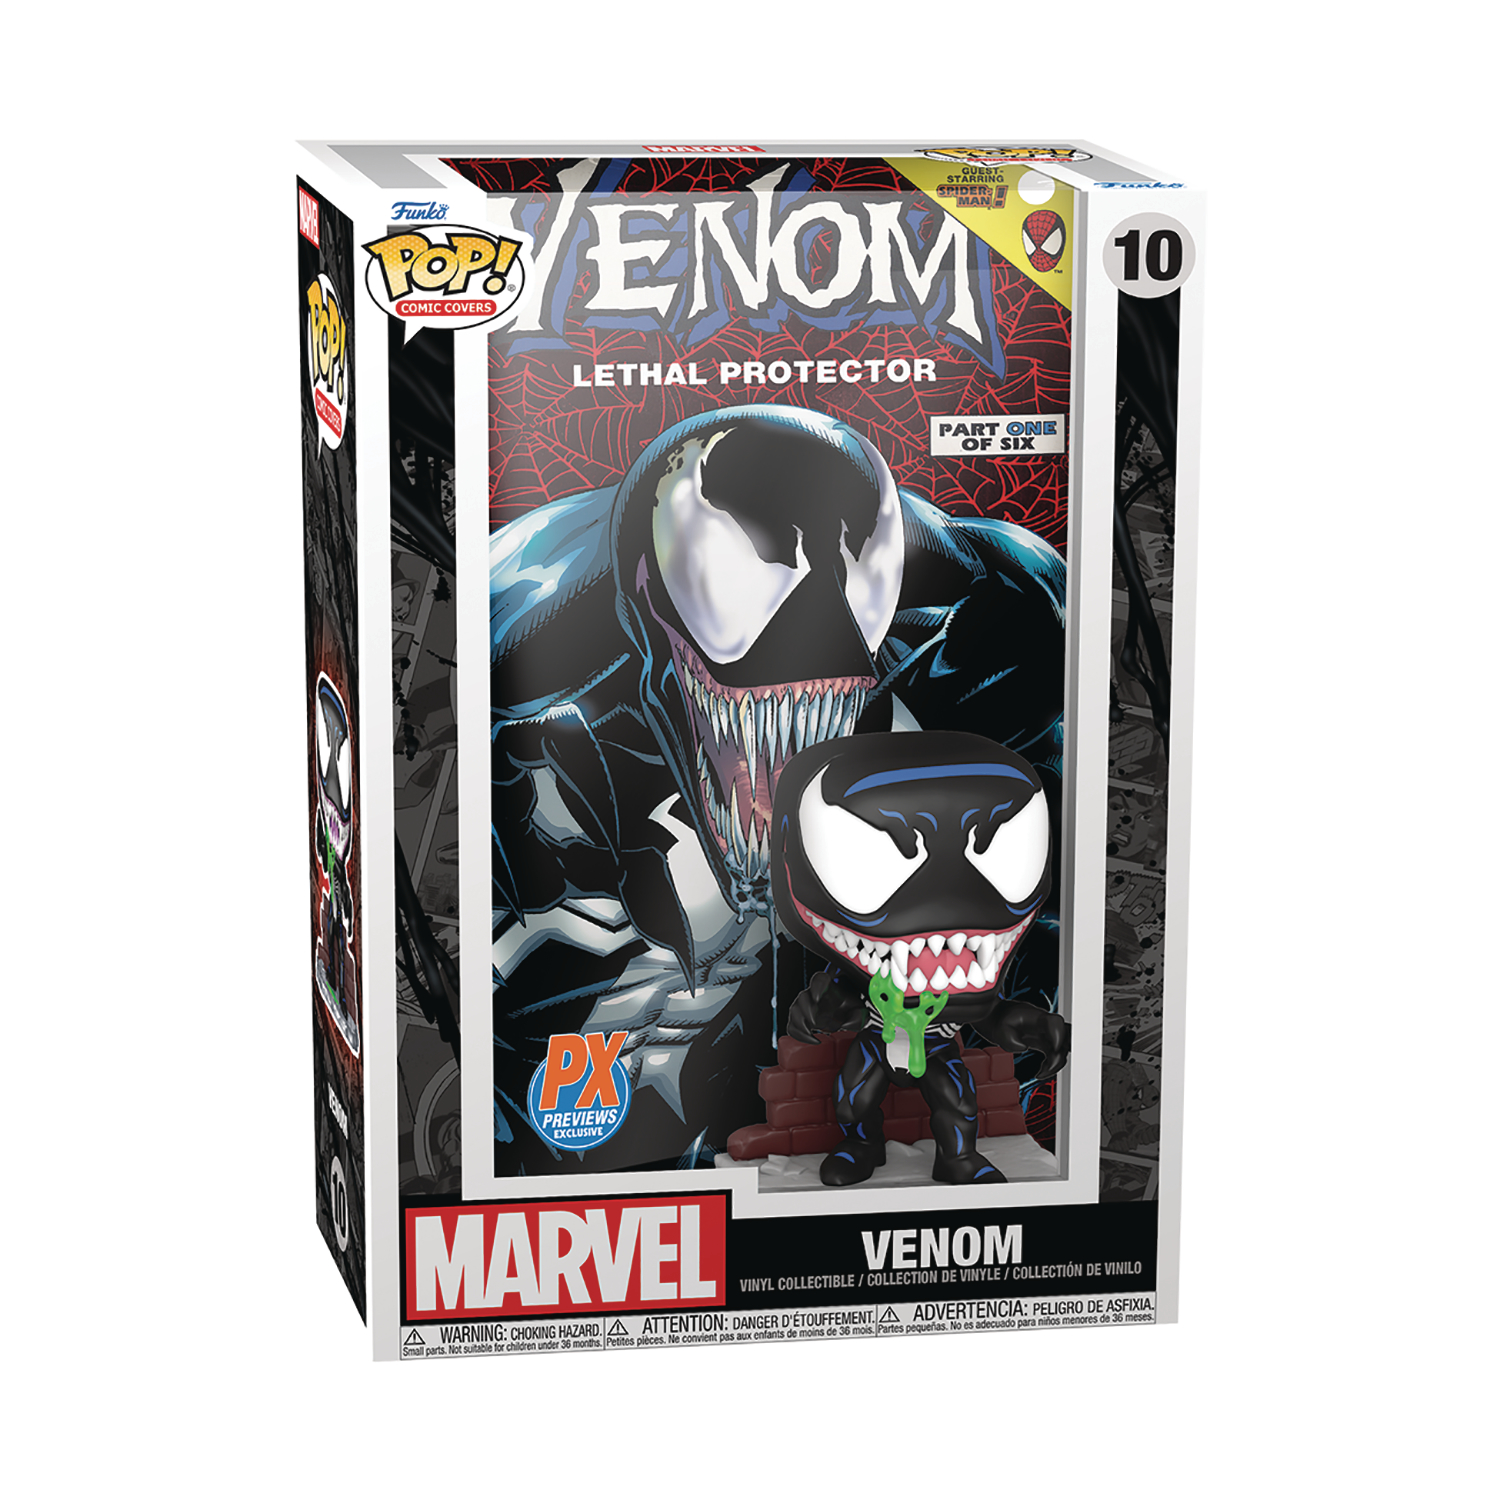 Pop Comic Cover Marvel Venom Lethal Protector V1 Px Vinyl Figure